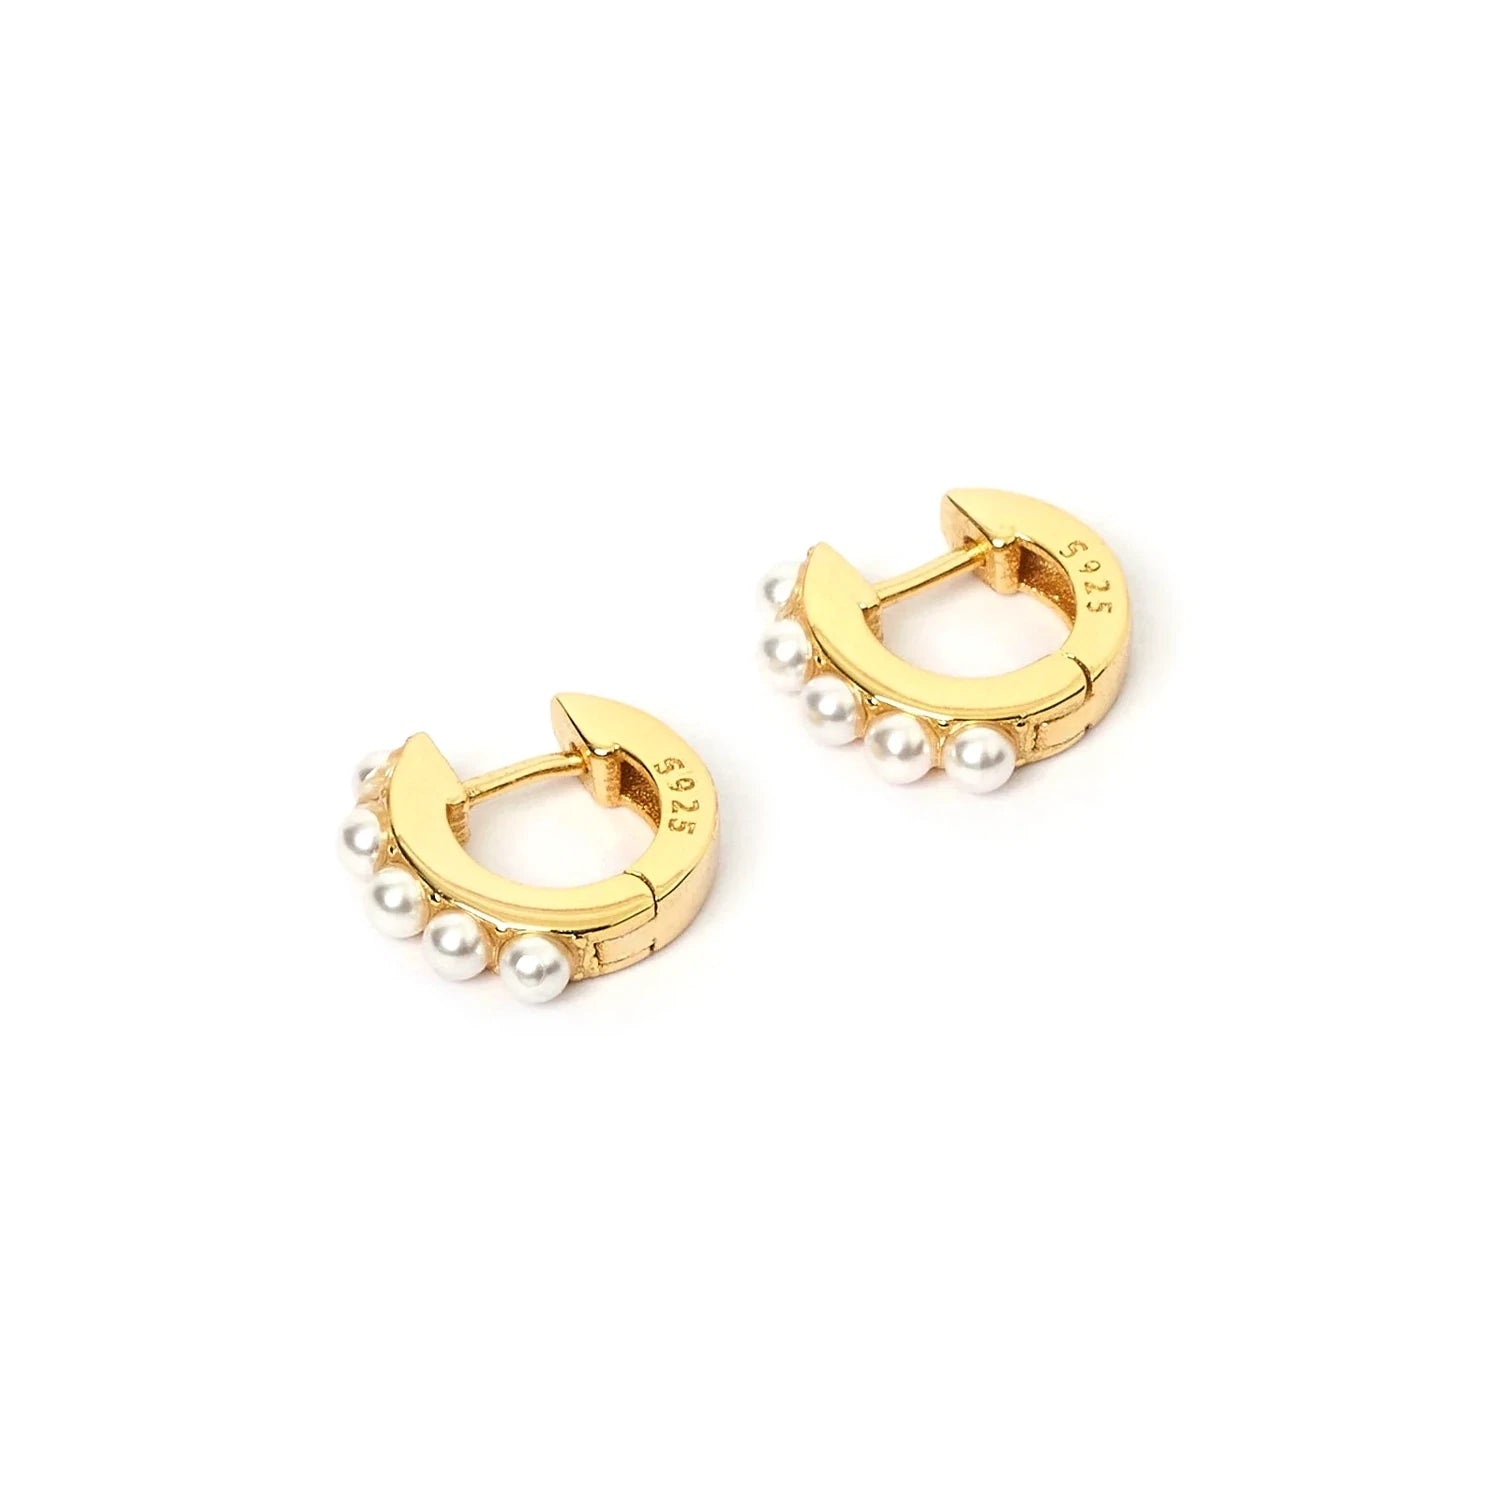 Presley Gold Earrings